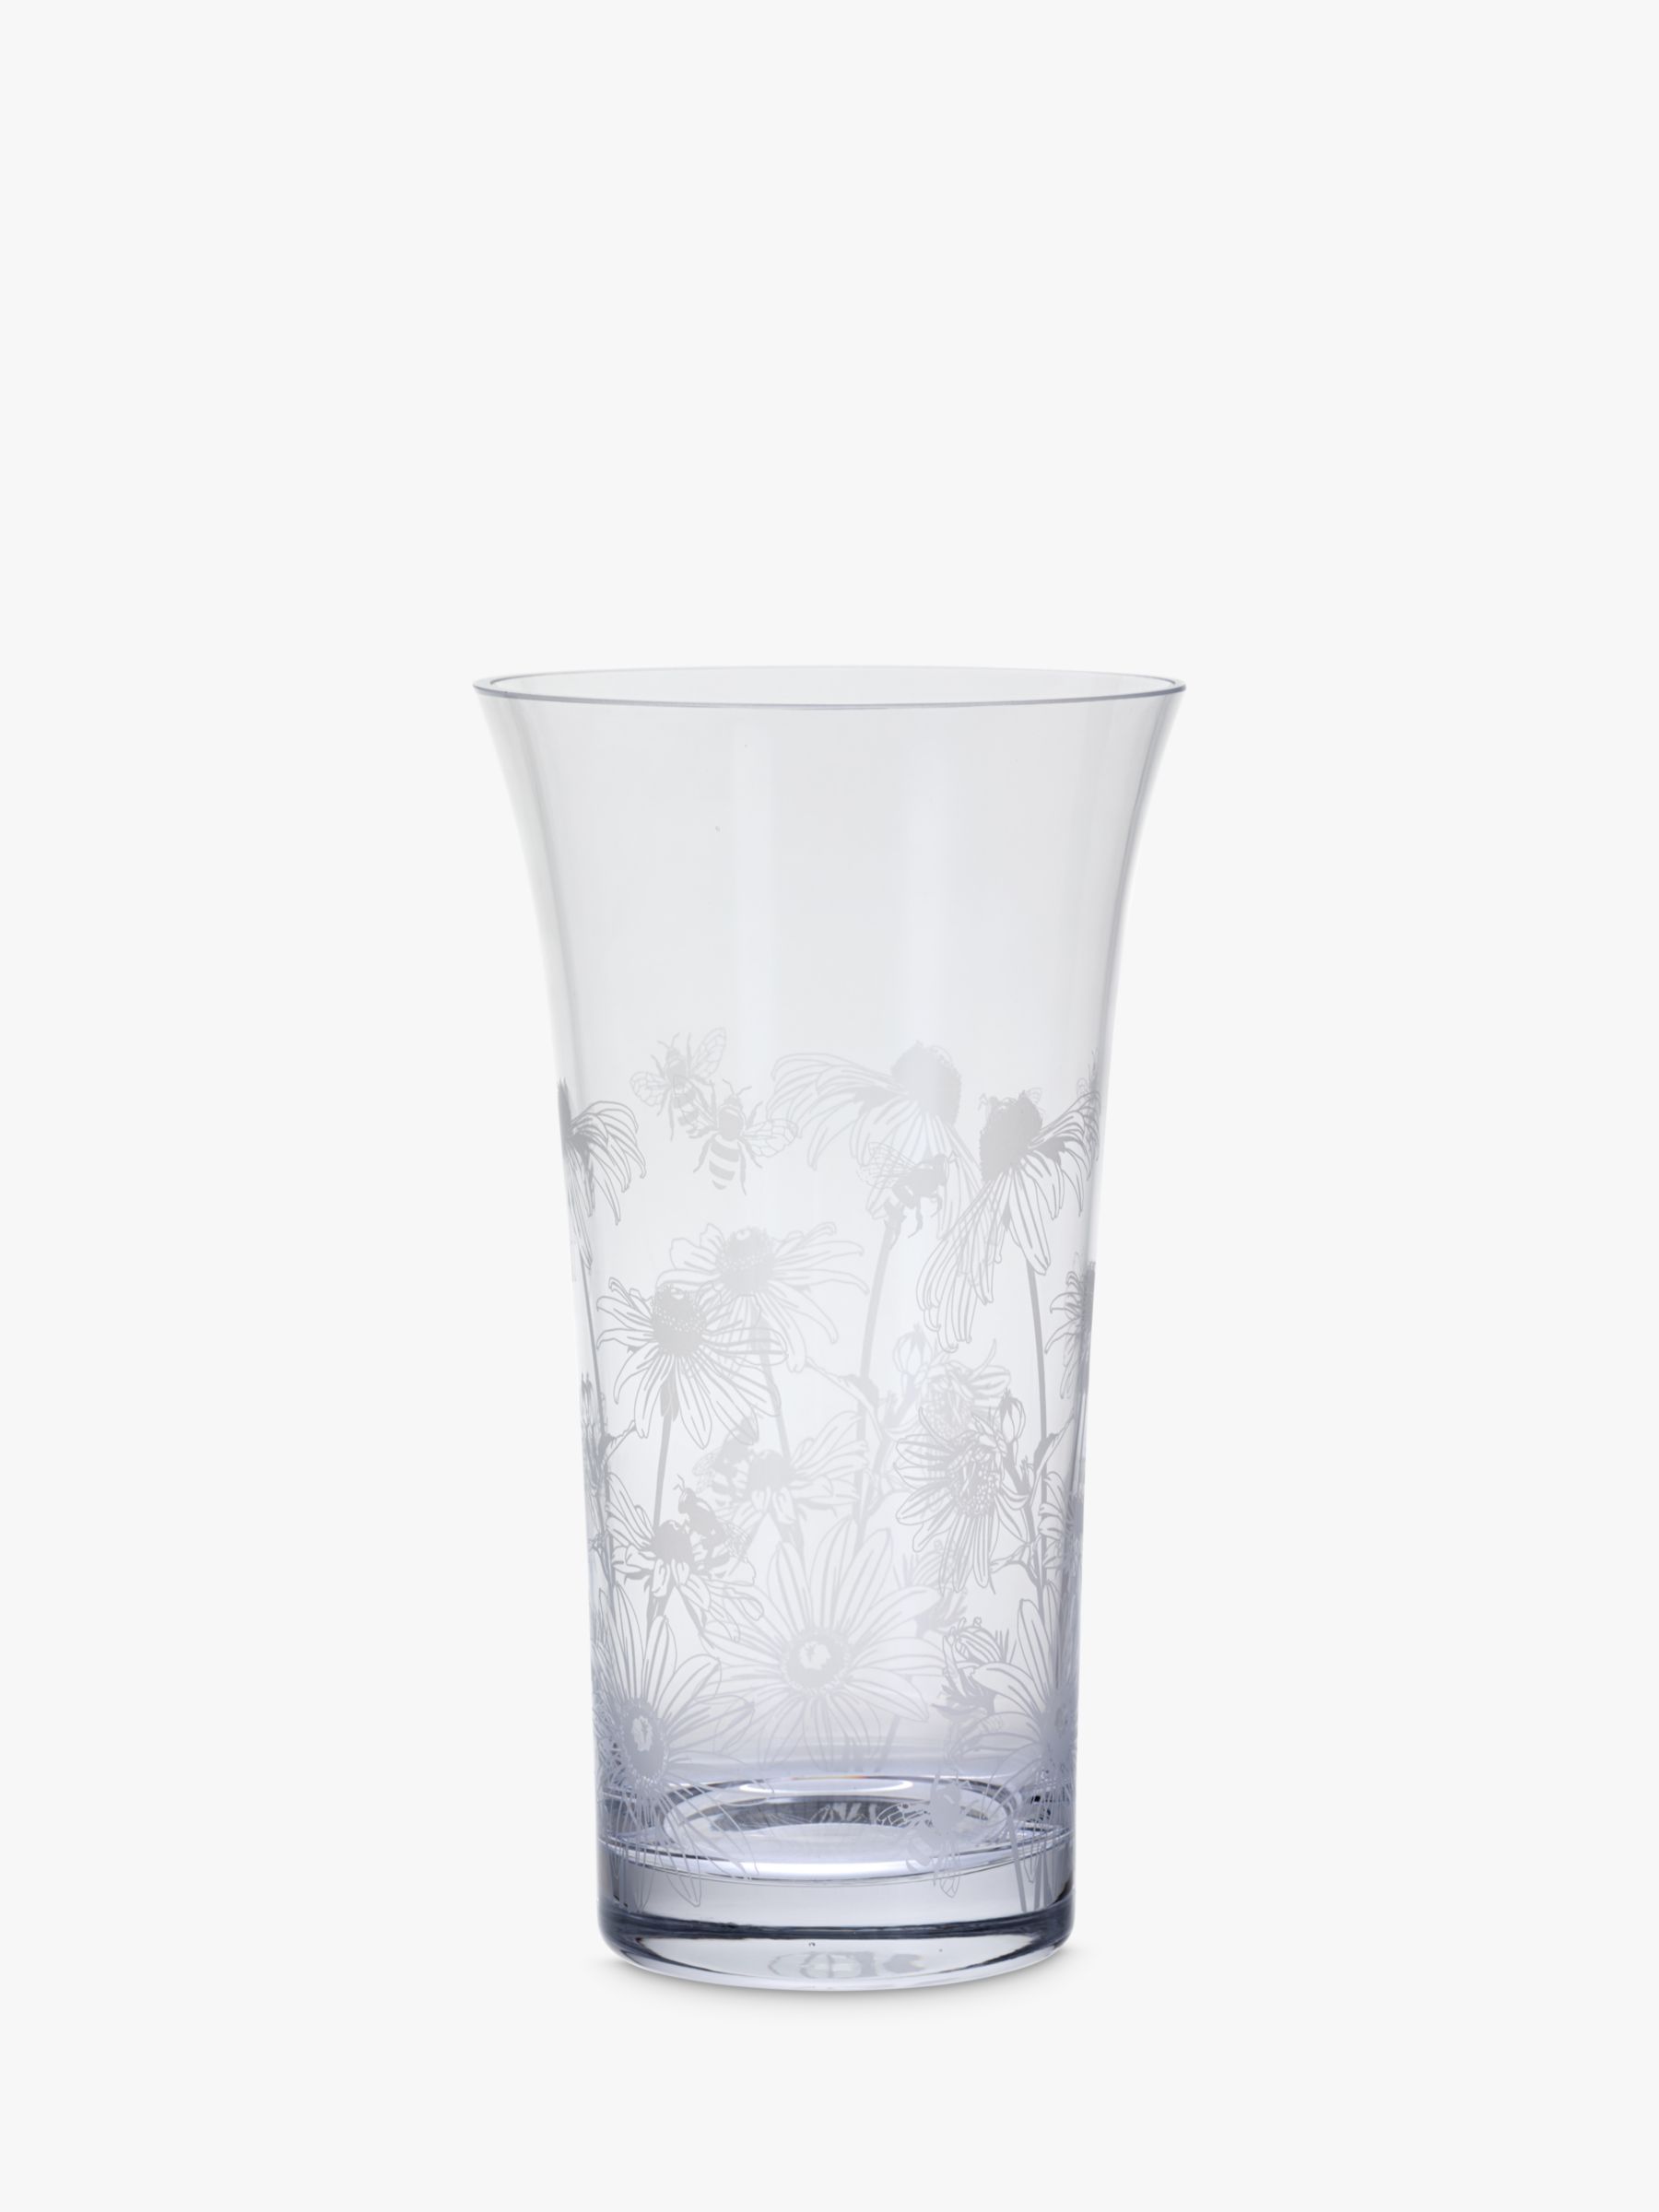 Dartington Crystal Bloom Rudbeckia Flared Vase, H29cm, Clear